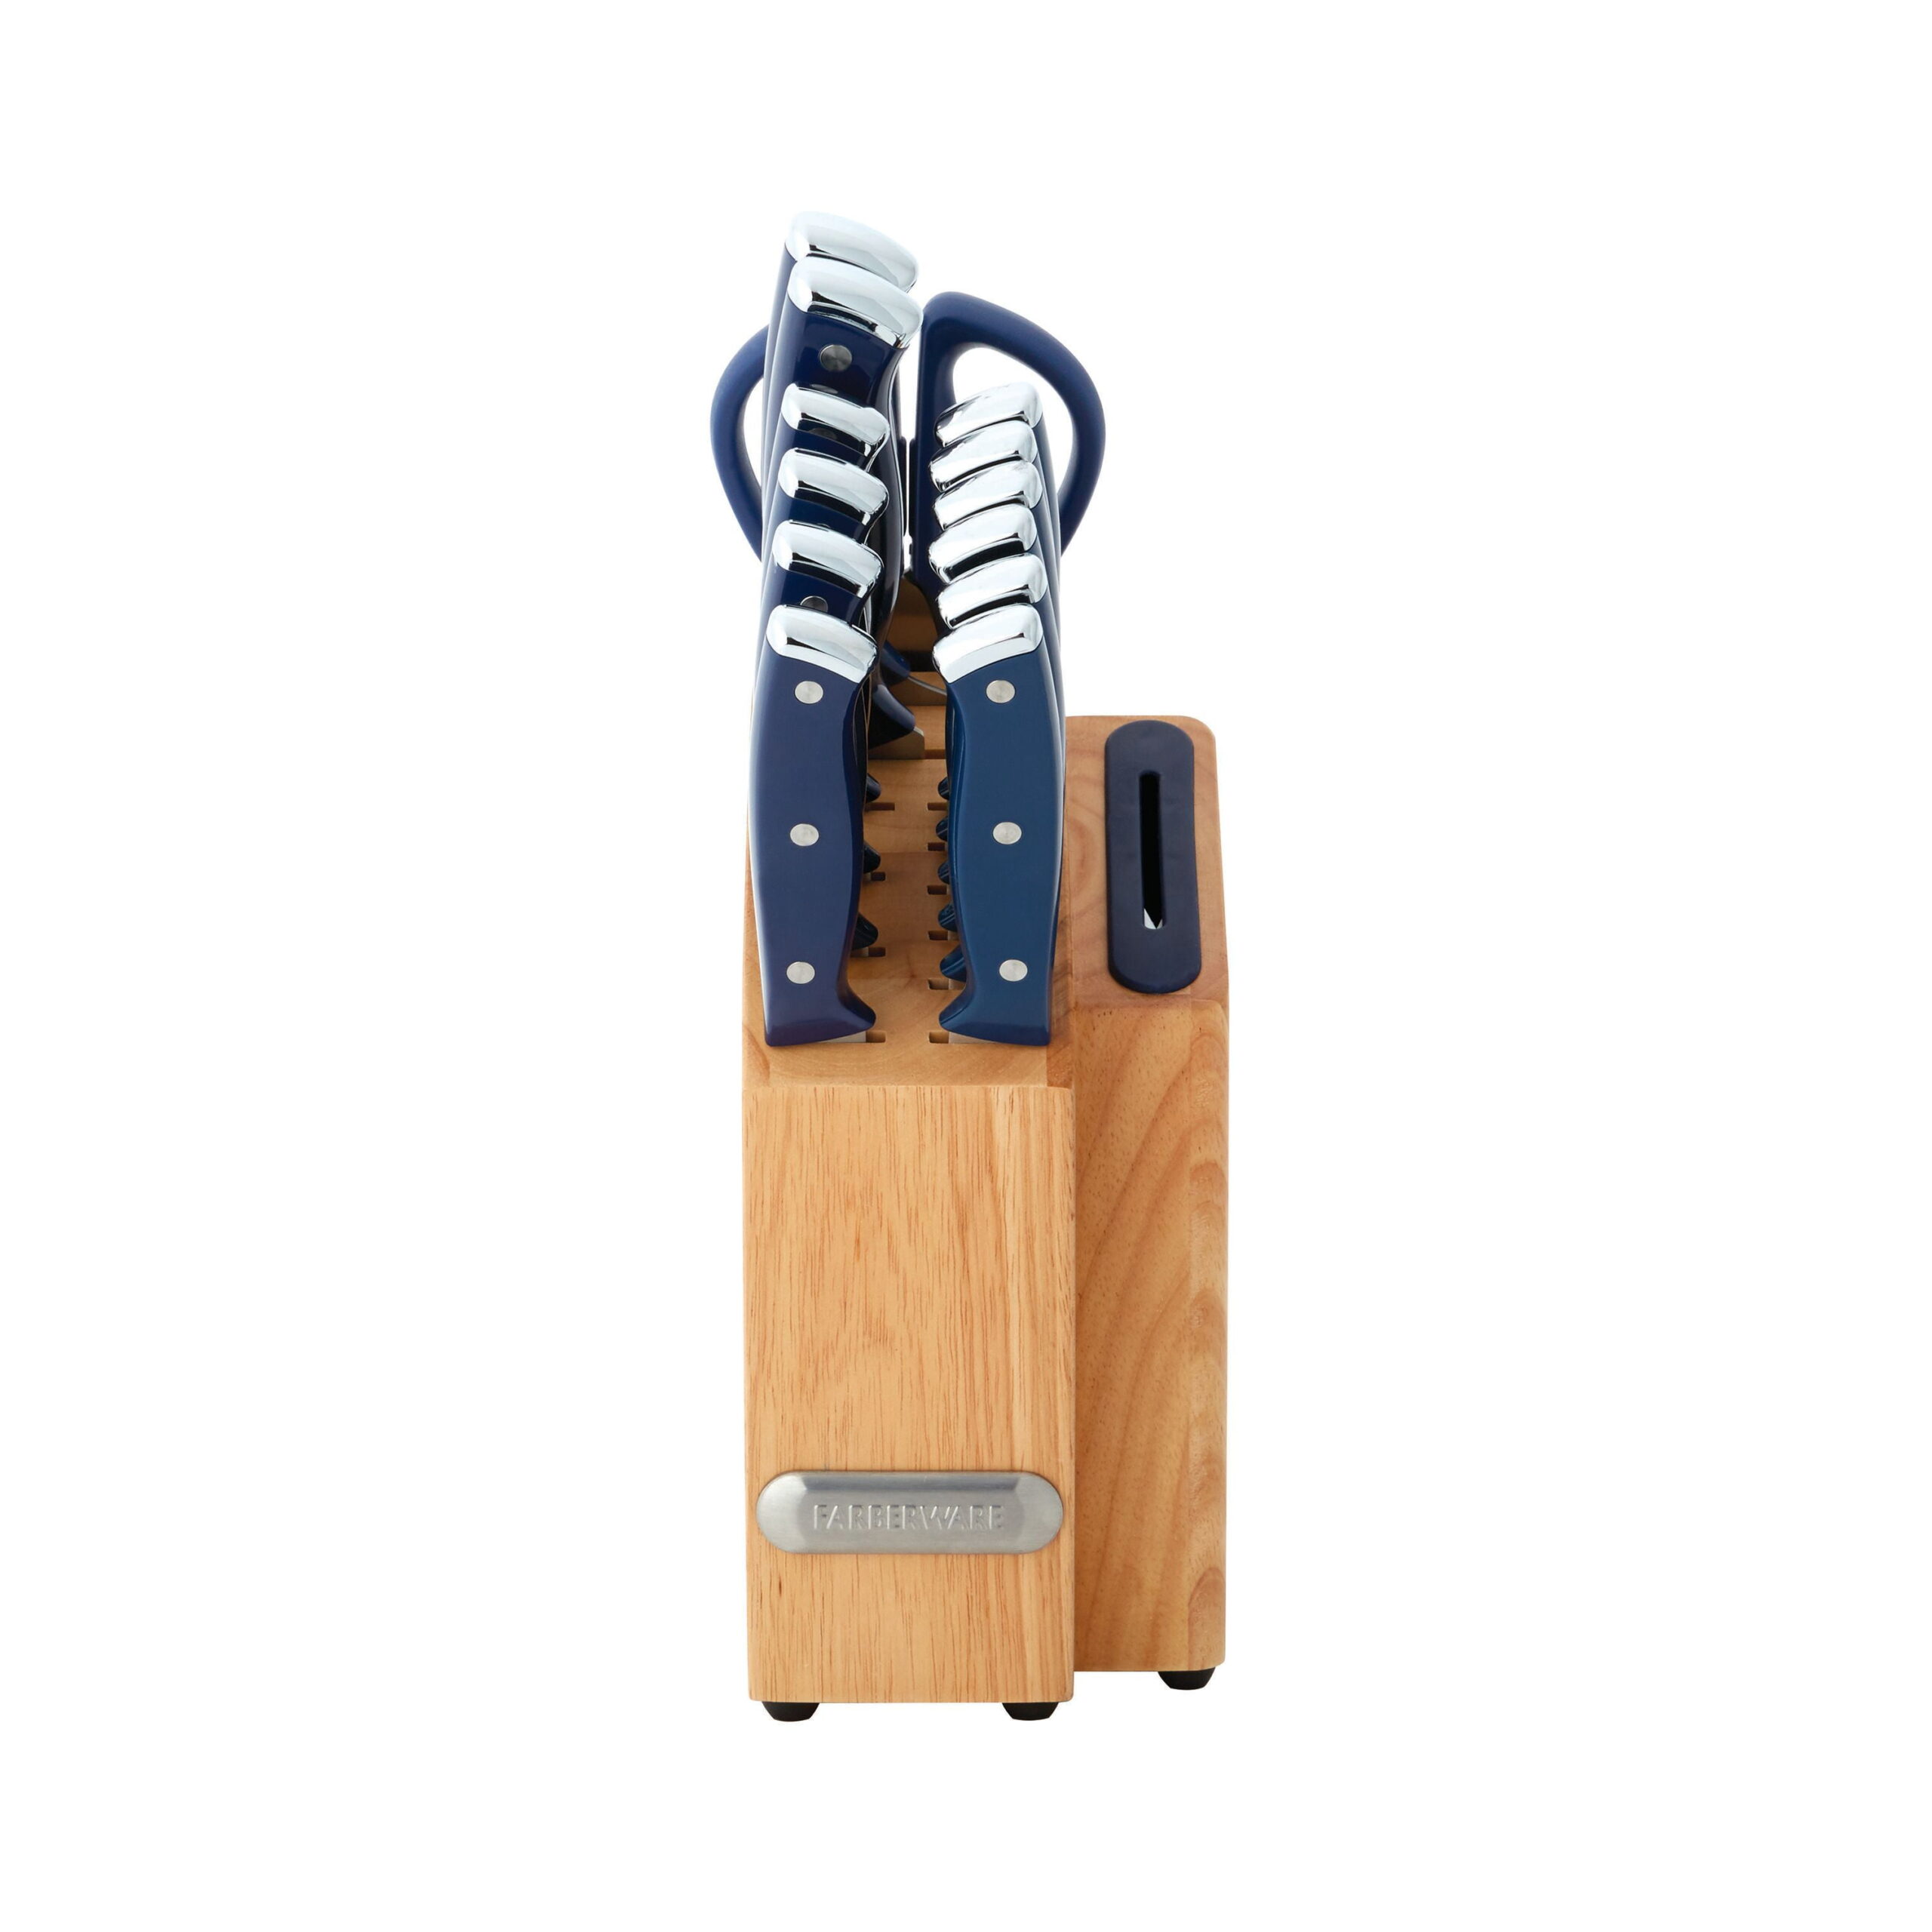 Farberware Edgekeeper 14 Pc. Turquoise Cutlery Set, Turquoise/Blue